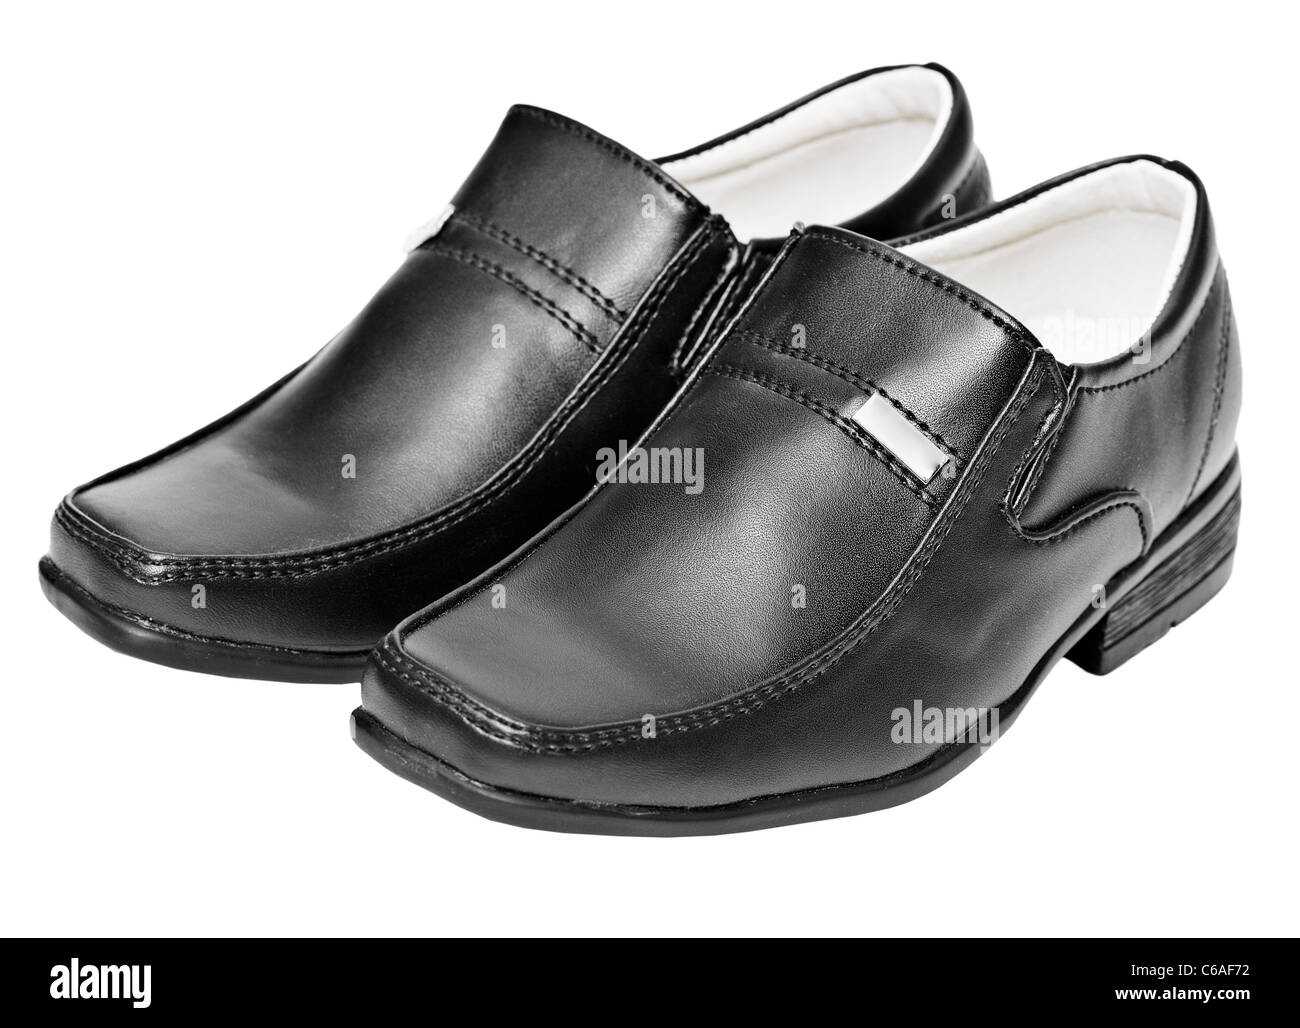 Men's black leather shoes isolated on white background Stock Photo - Alamy